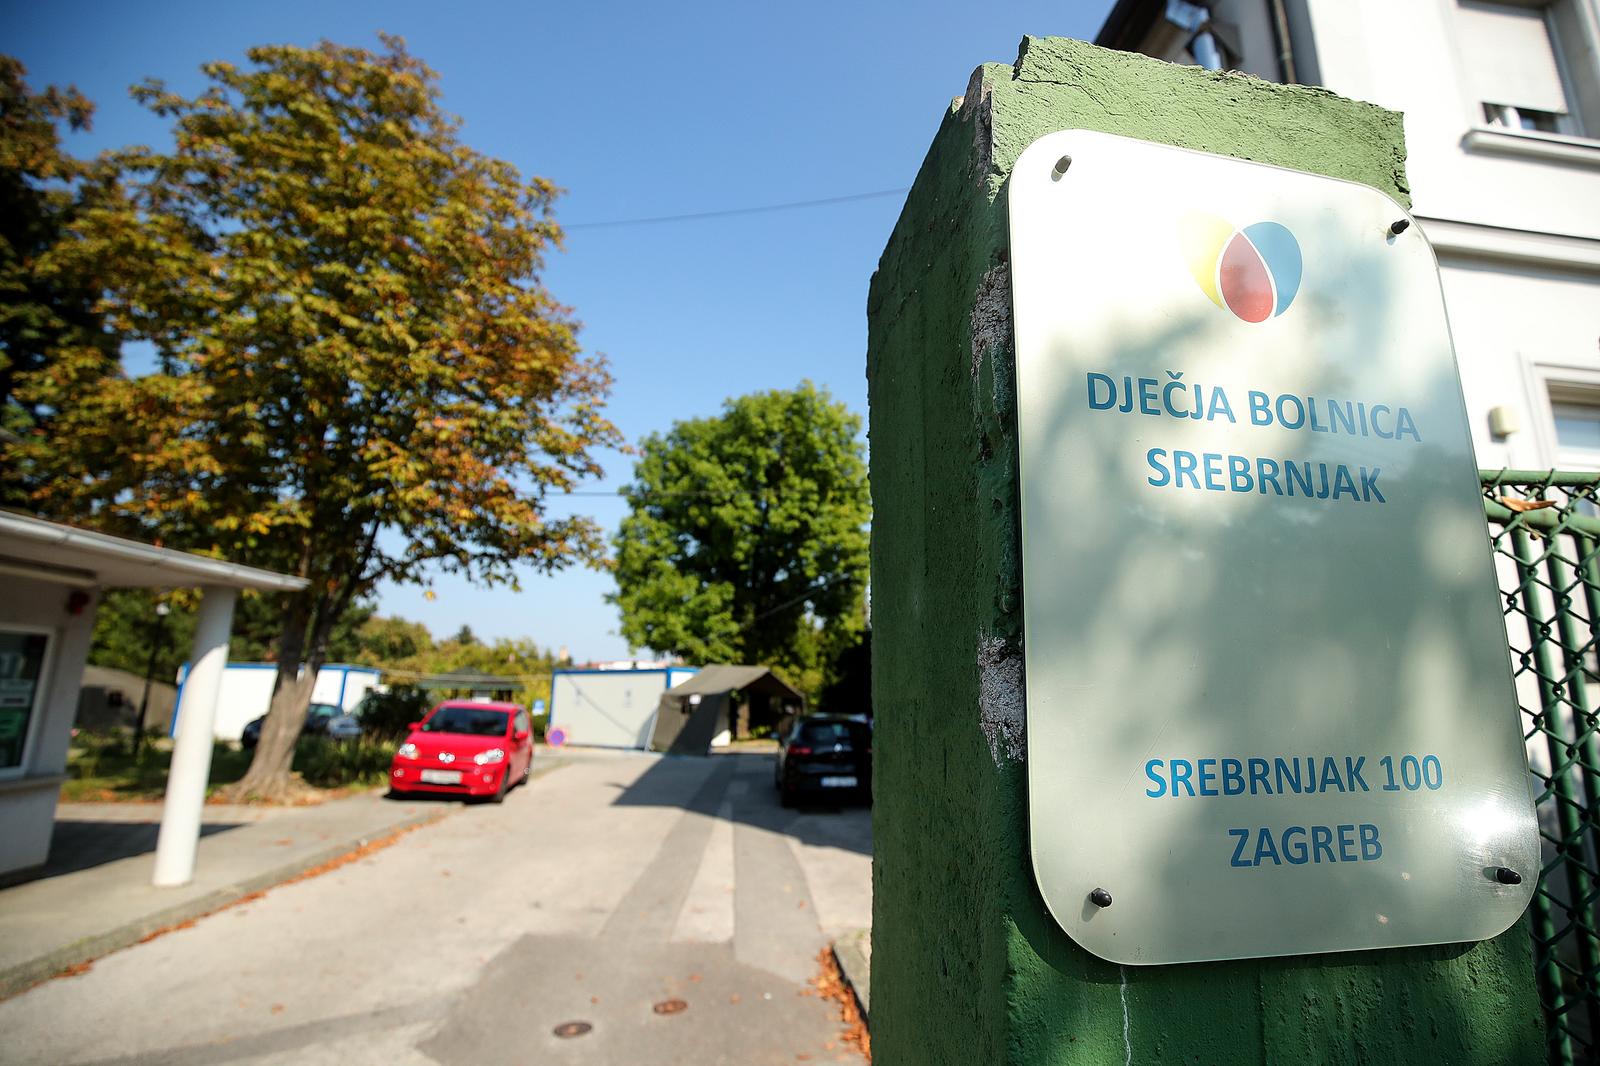 15.09.2020., Zagreb - Djecja bolnica Srebrnjak, kontejner za trijazu ispred bolnice. rPhoto: Goran Stanzl/PIXSELL